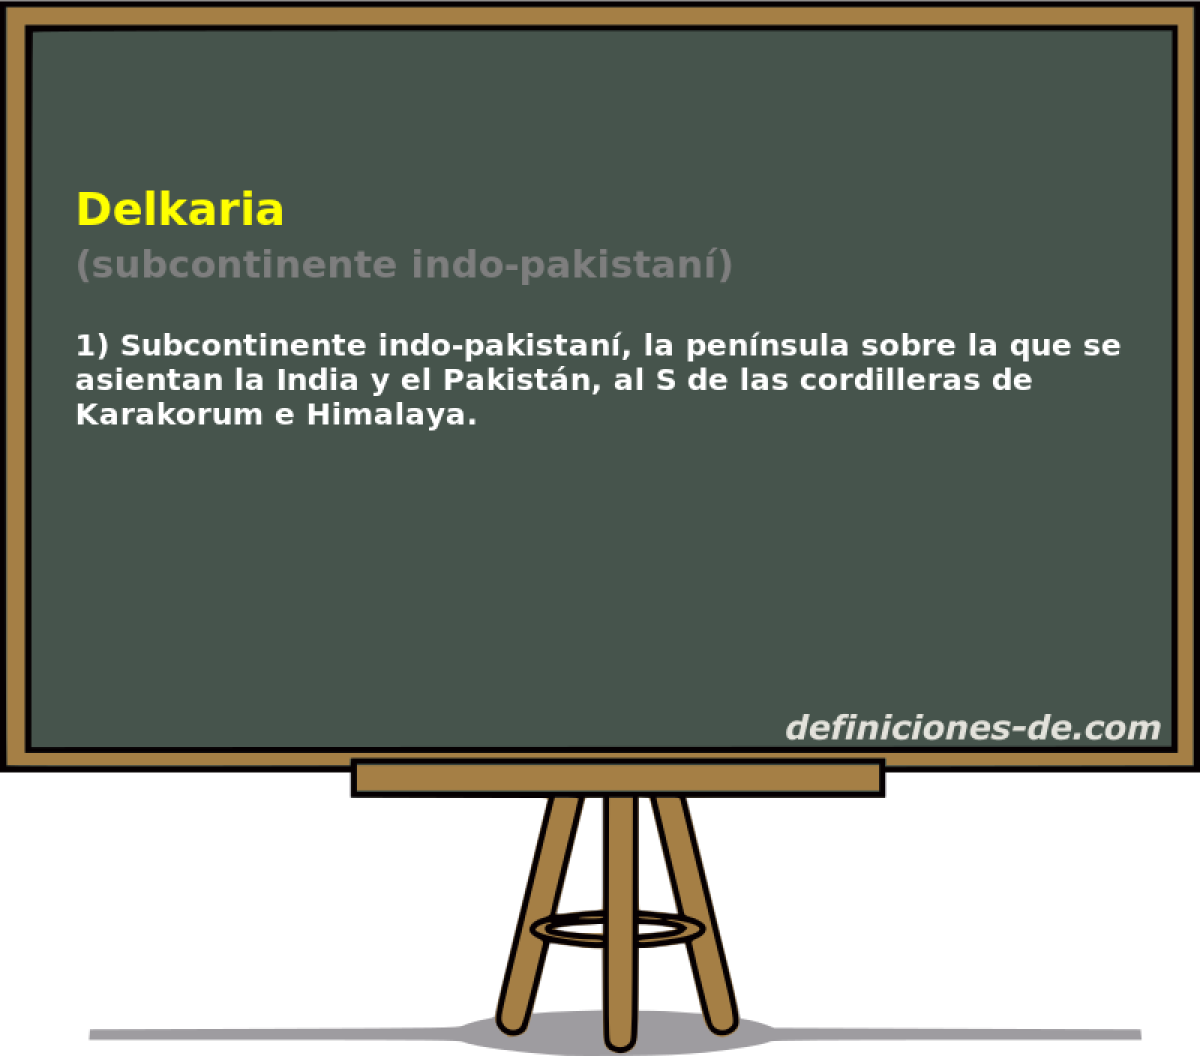 Delkaria (subcontinente indo-pakistan)